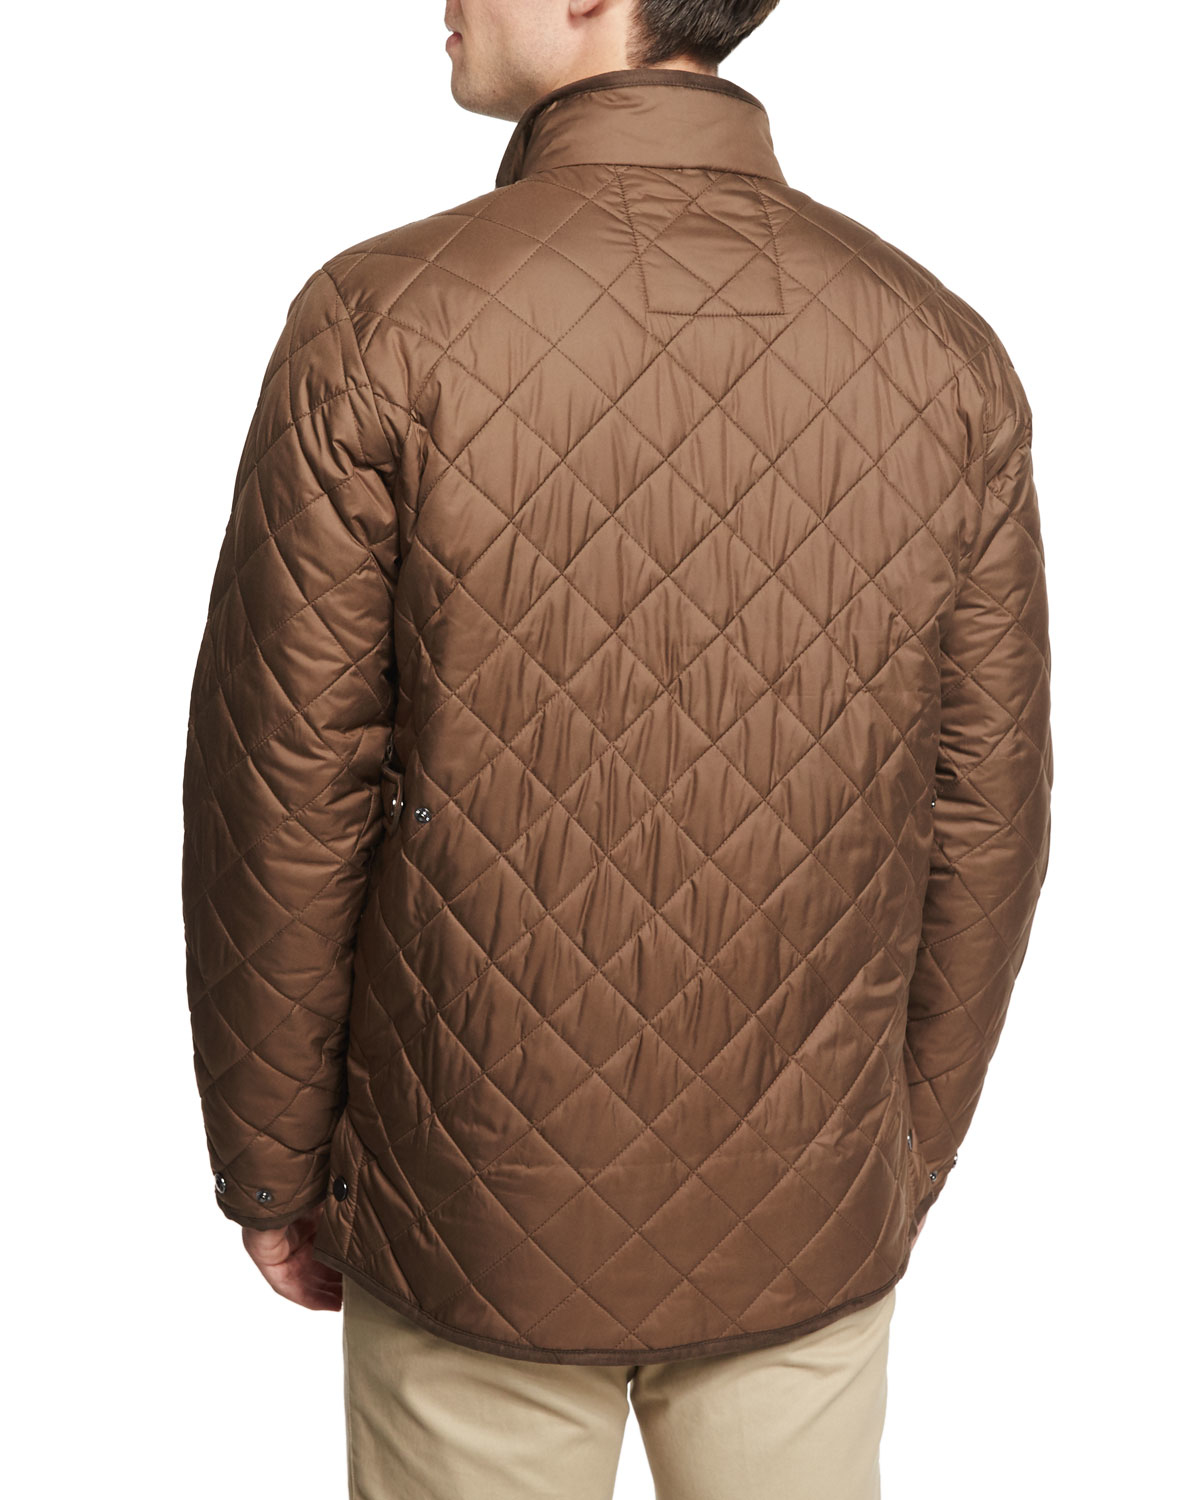 Lyst - Peter Millar Chesapeake Lightweight Quilted Jacket in Brown for Men